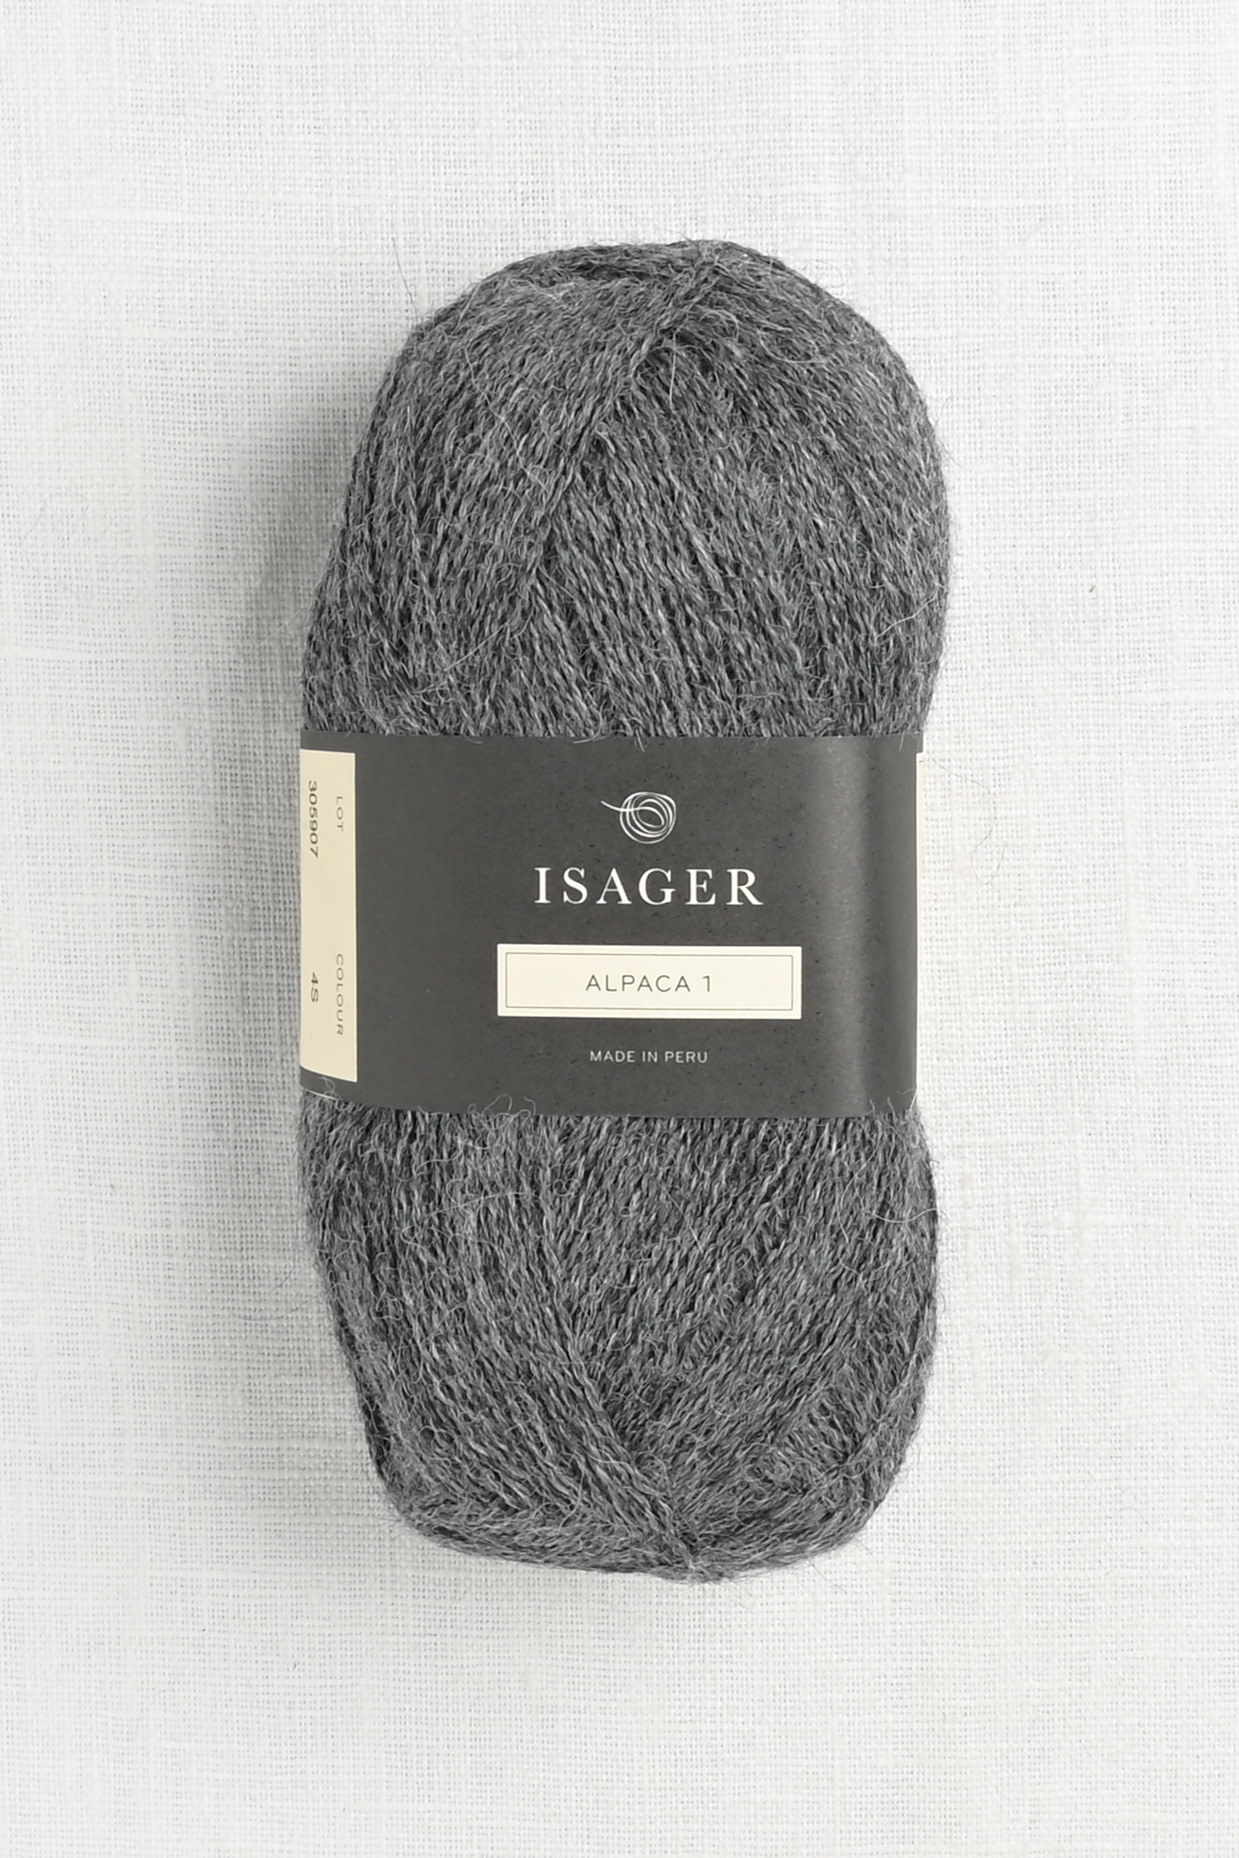 Isager Alpaca 1 4s - Wool and Company Fine Yarn